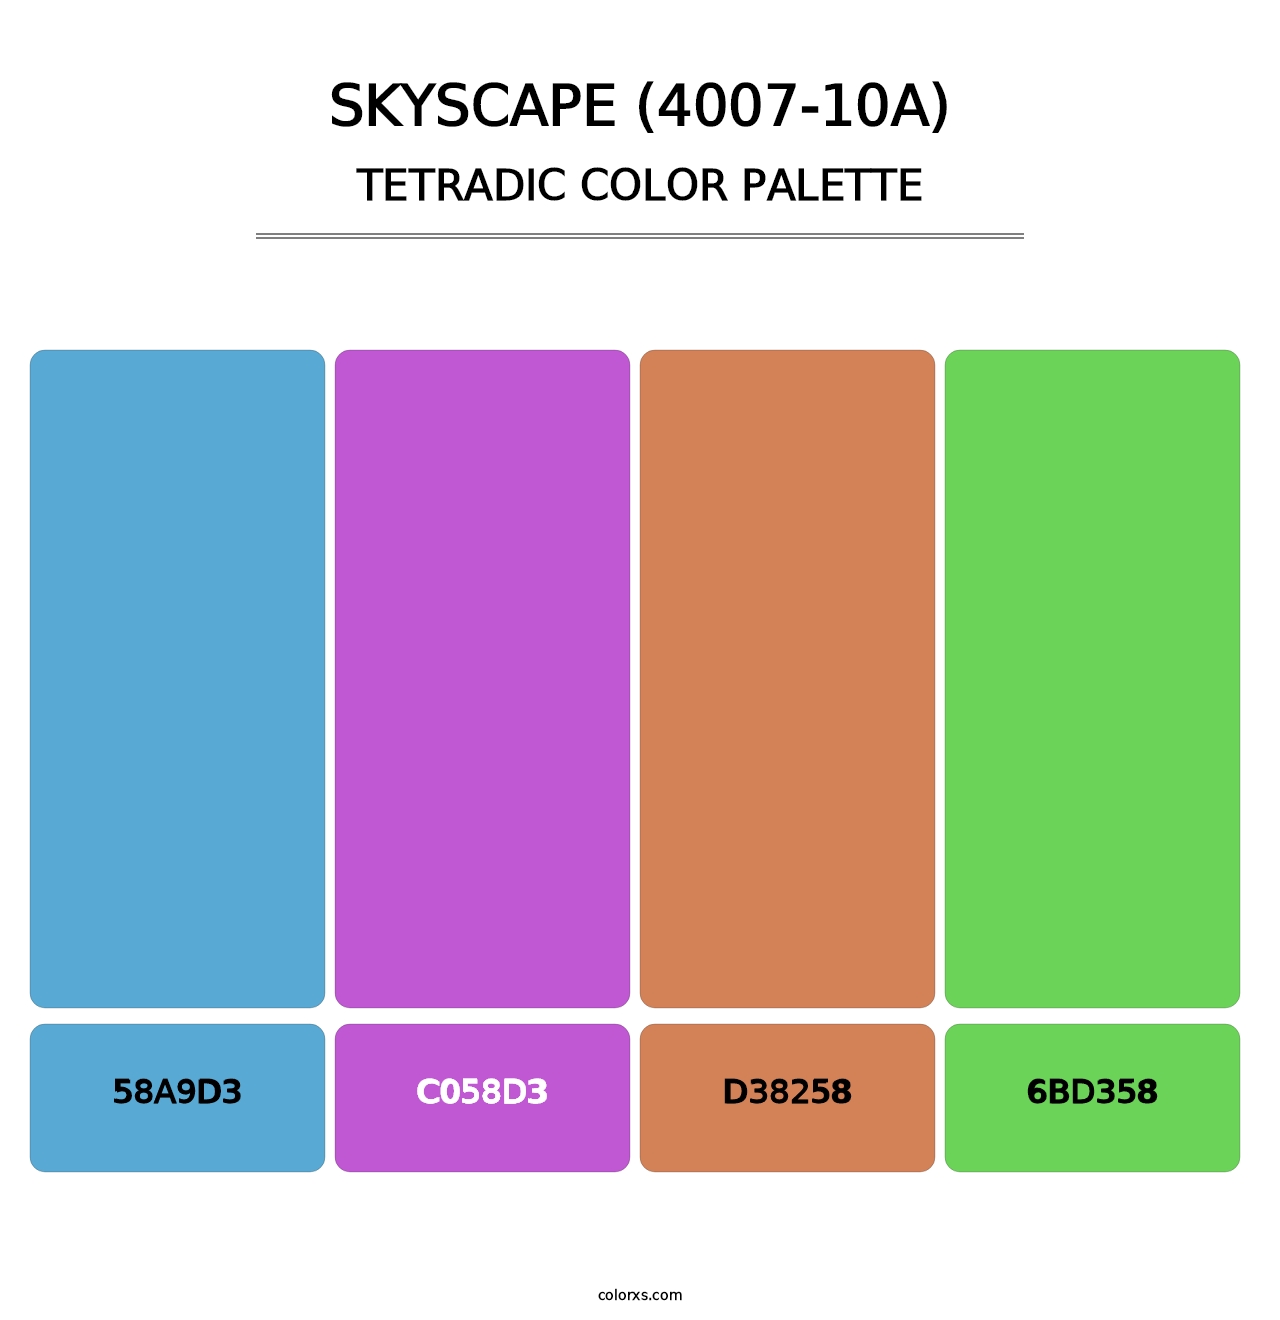 Skyscape (4007-10A) - Tetradic Color Palette